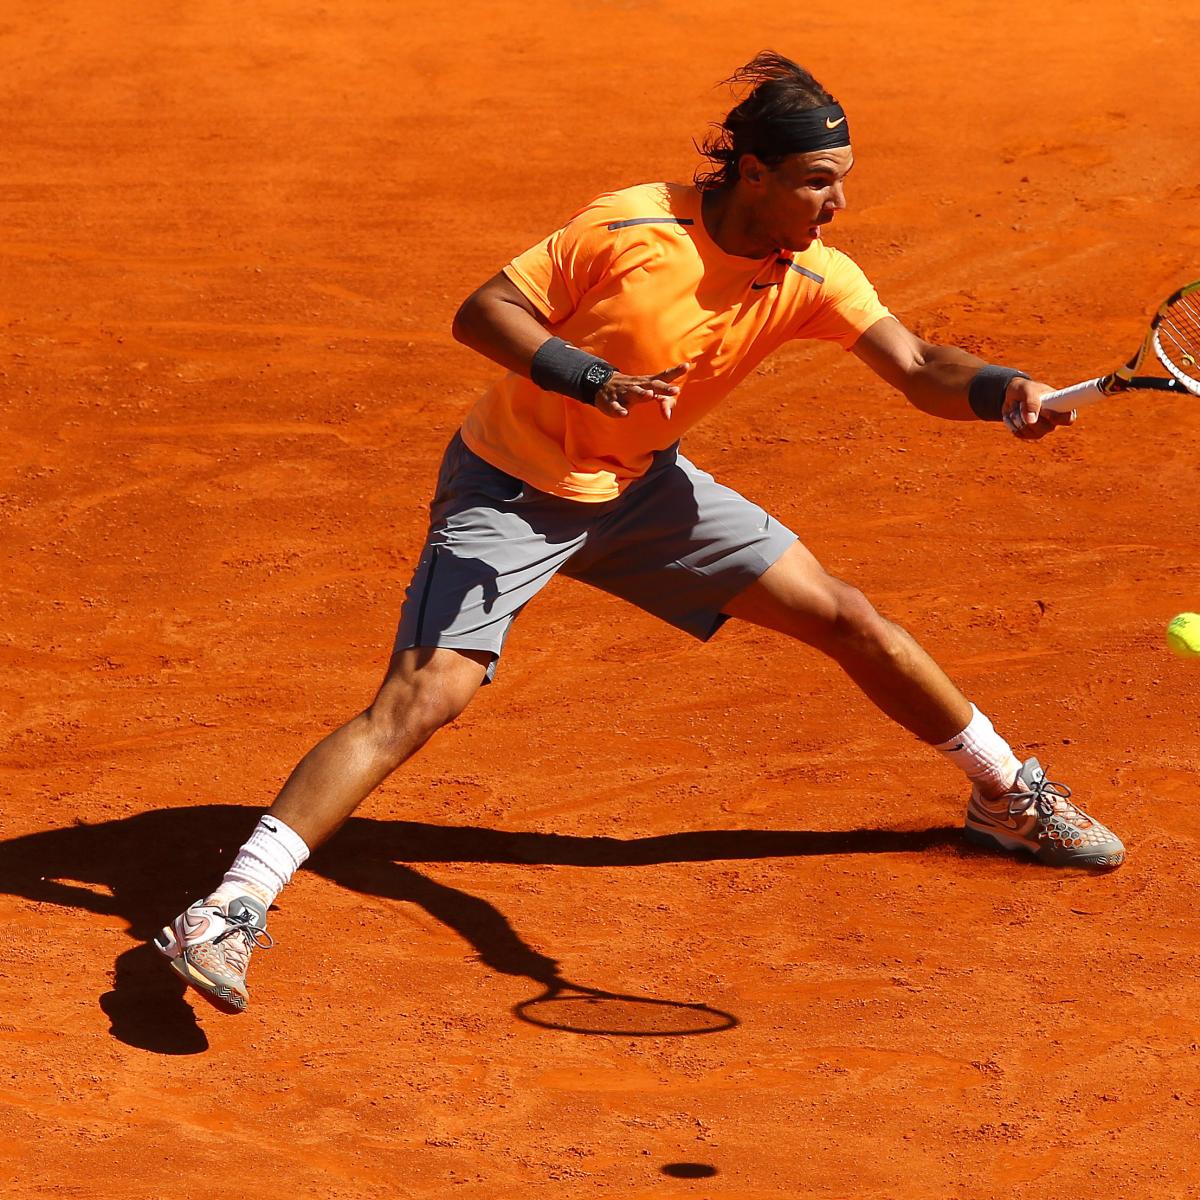 Monte Carlo Rolex Masters 2012 Results: Nadal's Win vs. Djokovic Is ...